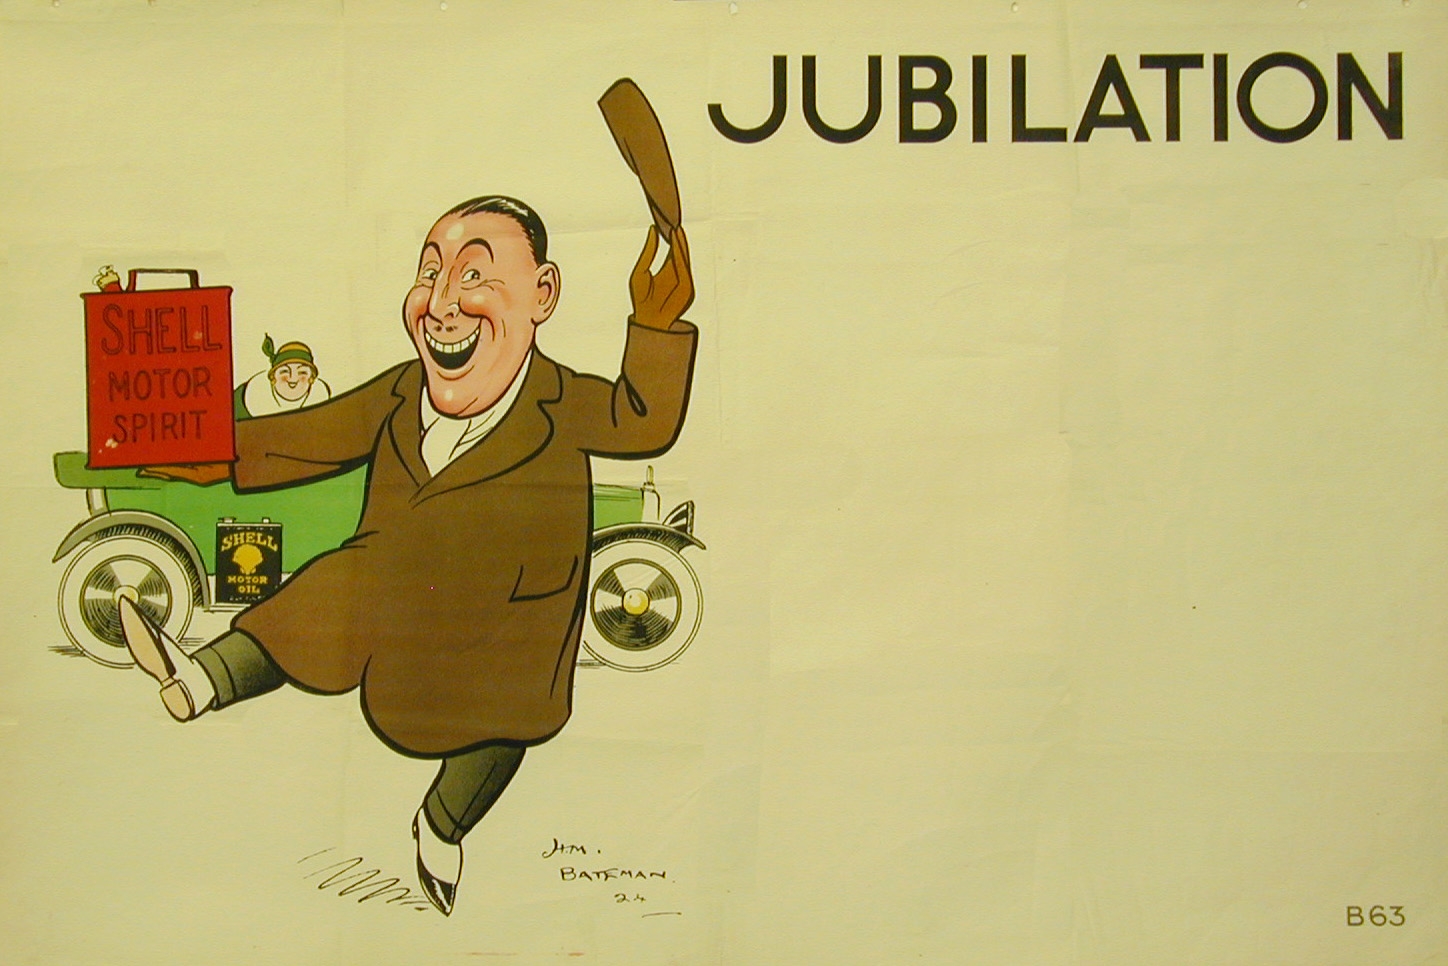 Pster of Jubilation by H.M. Bateman, 1924